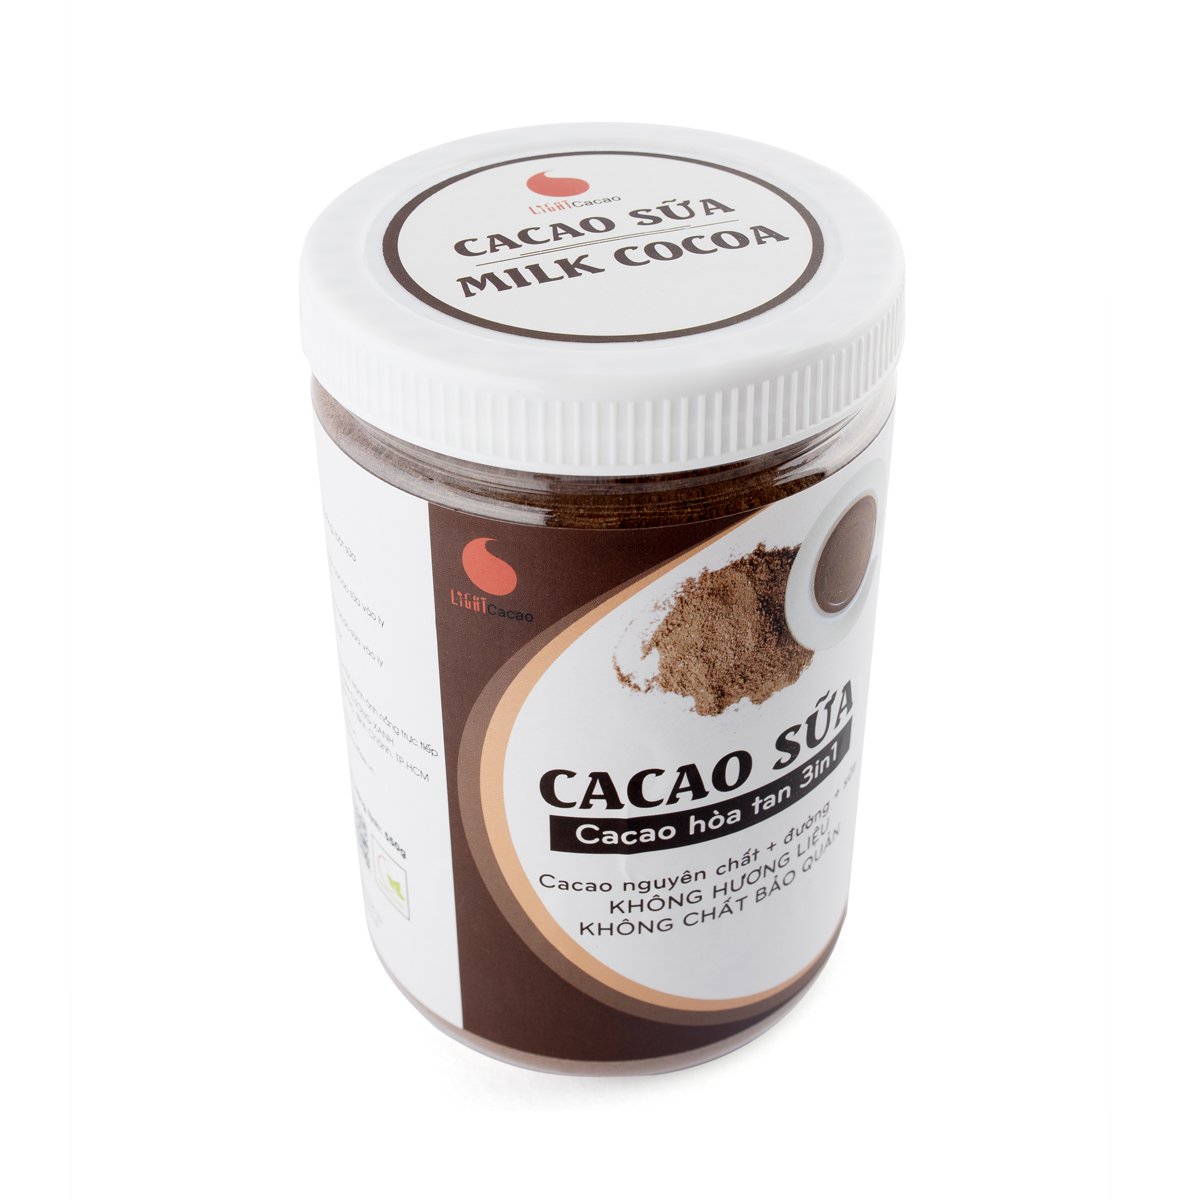 Cacao sữa 3in1 thơm ngon, tiện lợi Light Cacao - hũ 550g